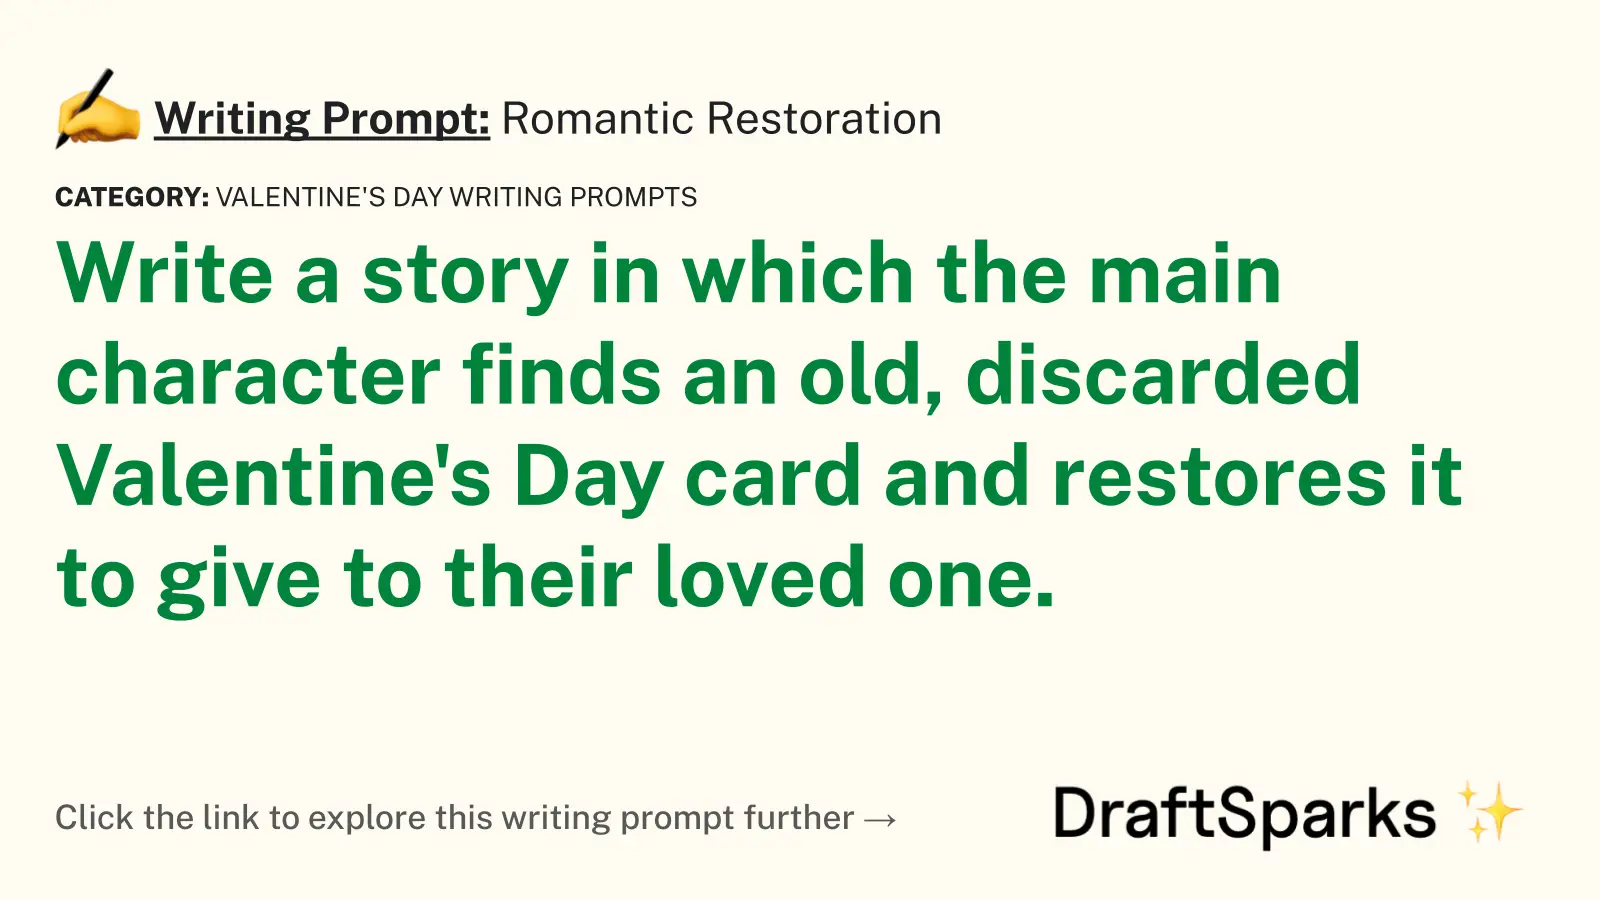 Romantic Restoration